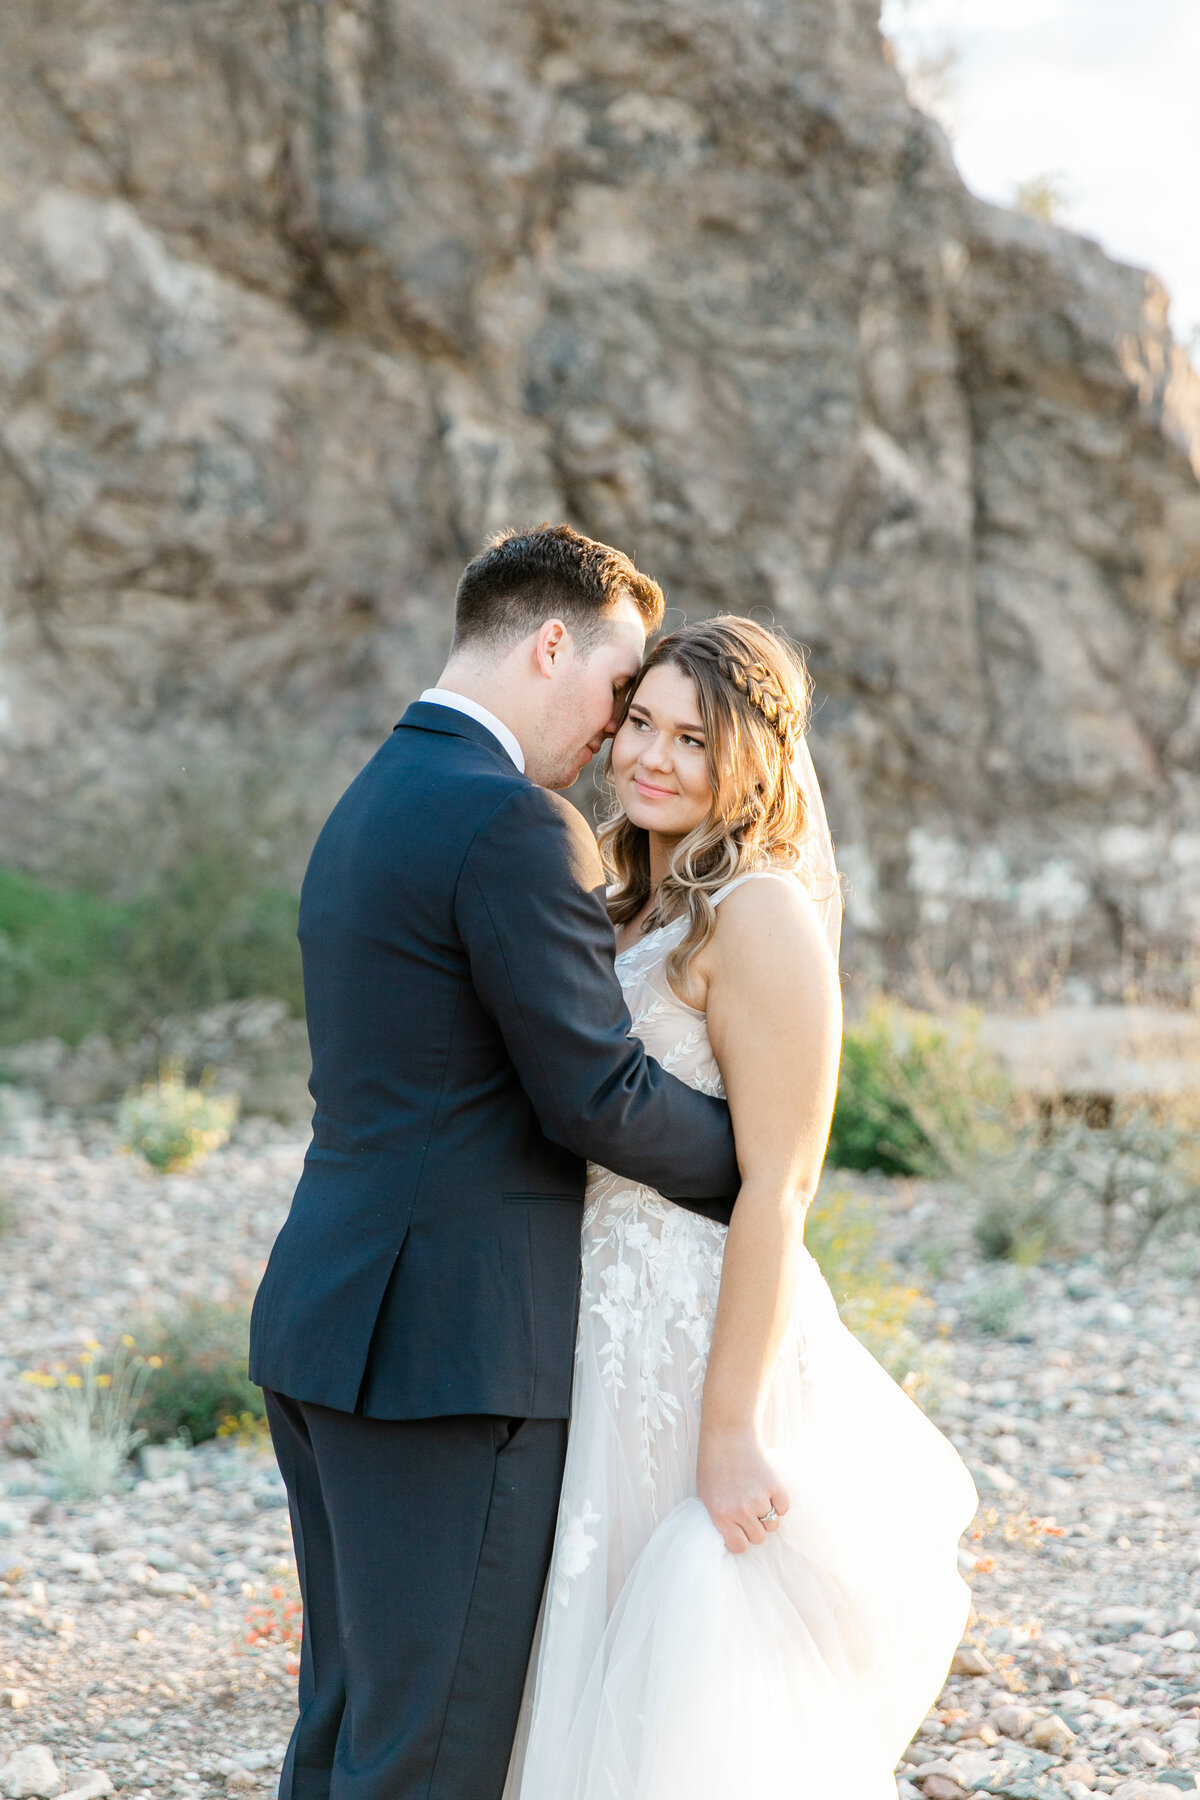 Karlie Colleen Photography - Arizona Backyard wedding - Brittney & Josh-209